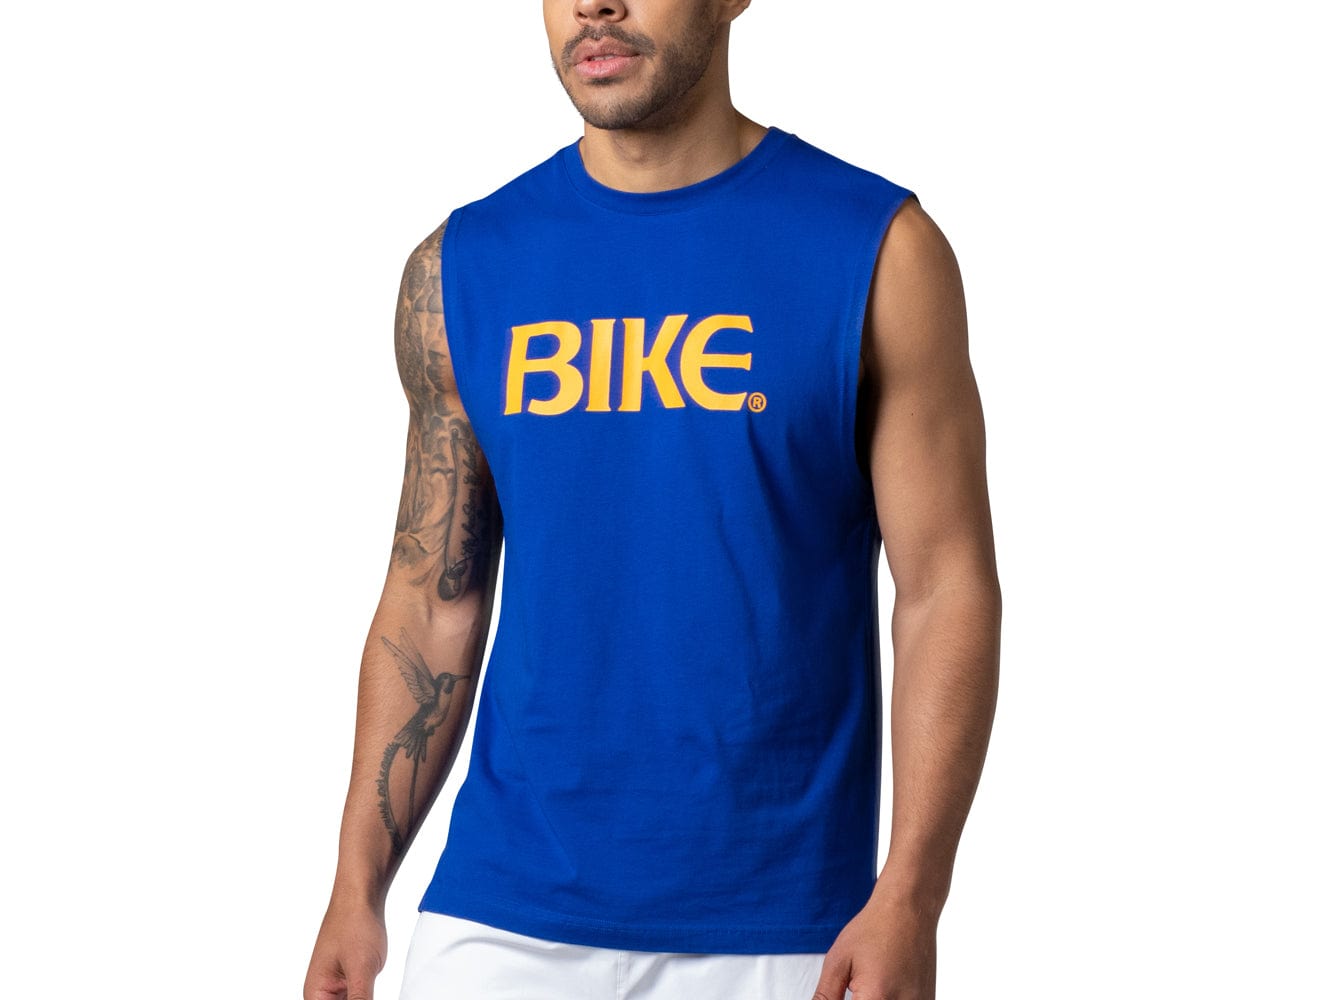 Man wearing blue BIKE® sleeveless tshirt